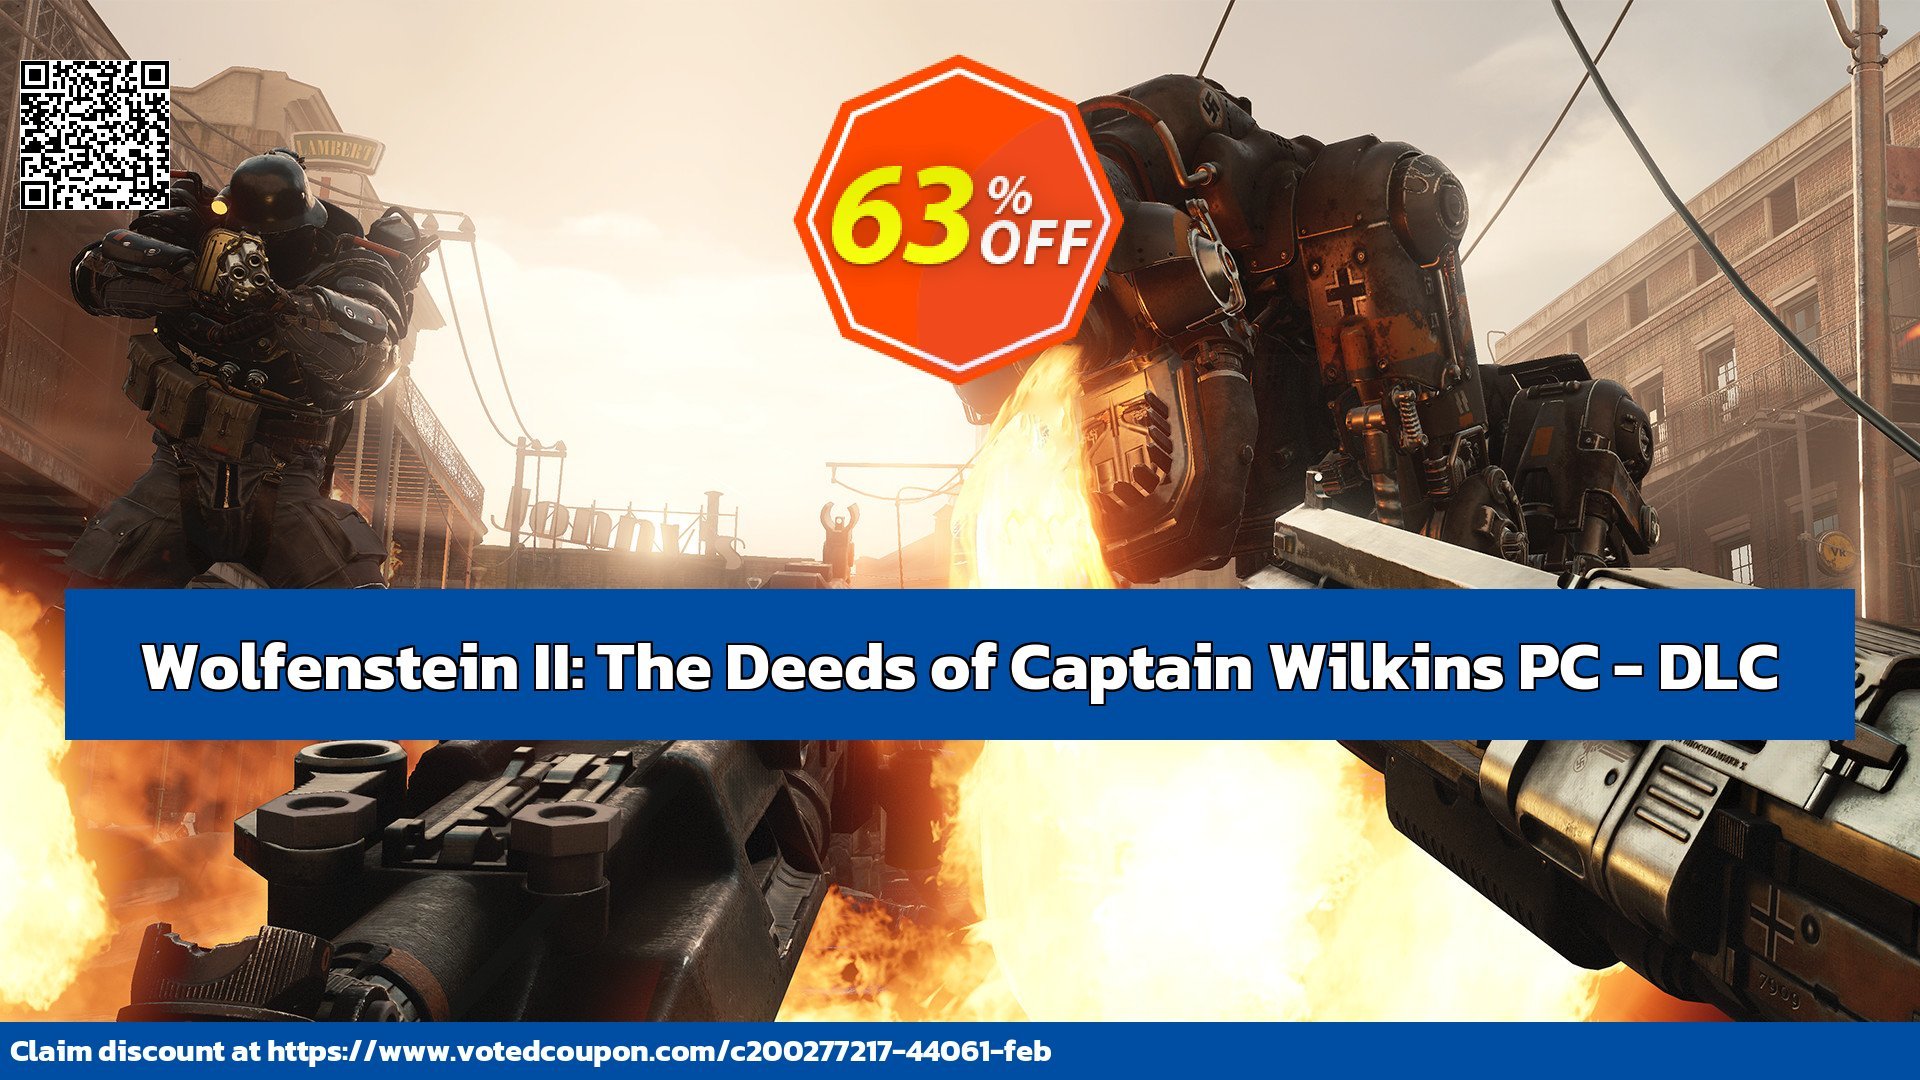 Wolfenstein II: The Deeds of Captain Wilkins PC - DLC Coupon, discount Wolfenstein II: The Deeds of Captain Wilkins PC - DLC Deal CDkeys. Promotion: Wolfenstein II: The Deeds of Captain Wilkins PC - DLC Exclusive Sale offer